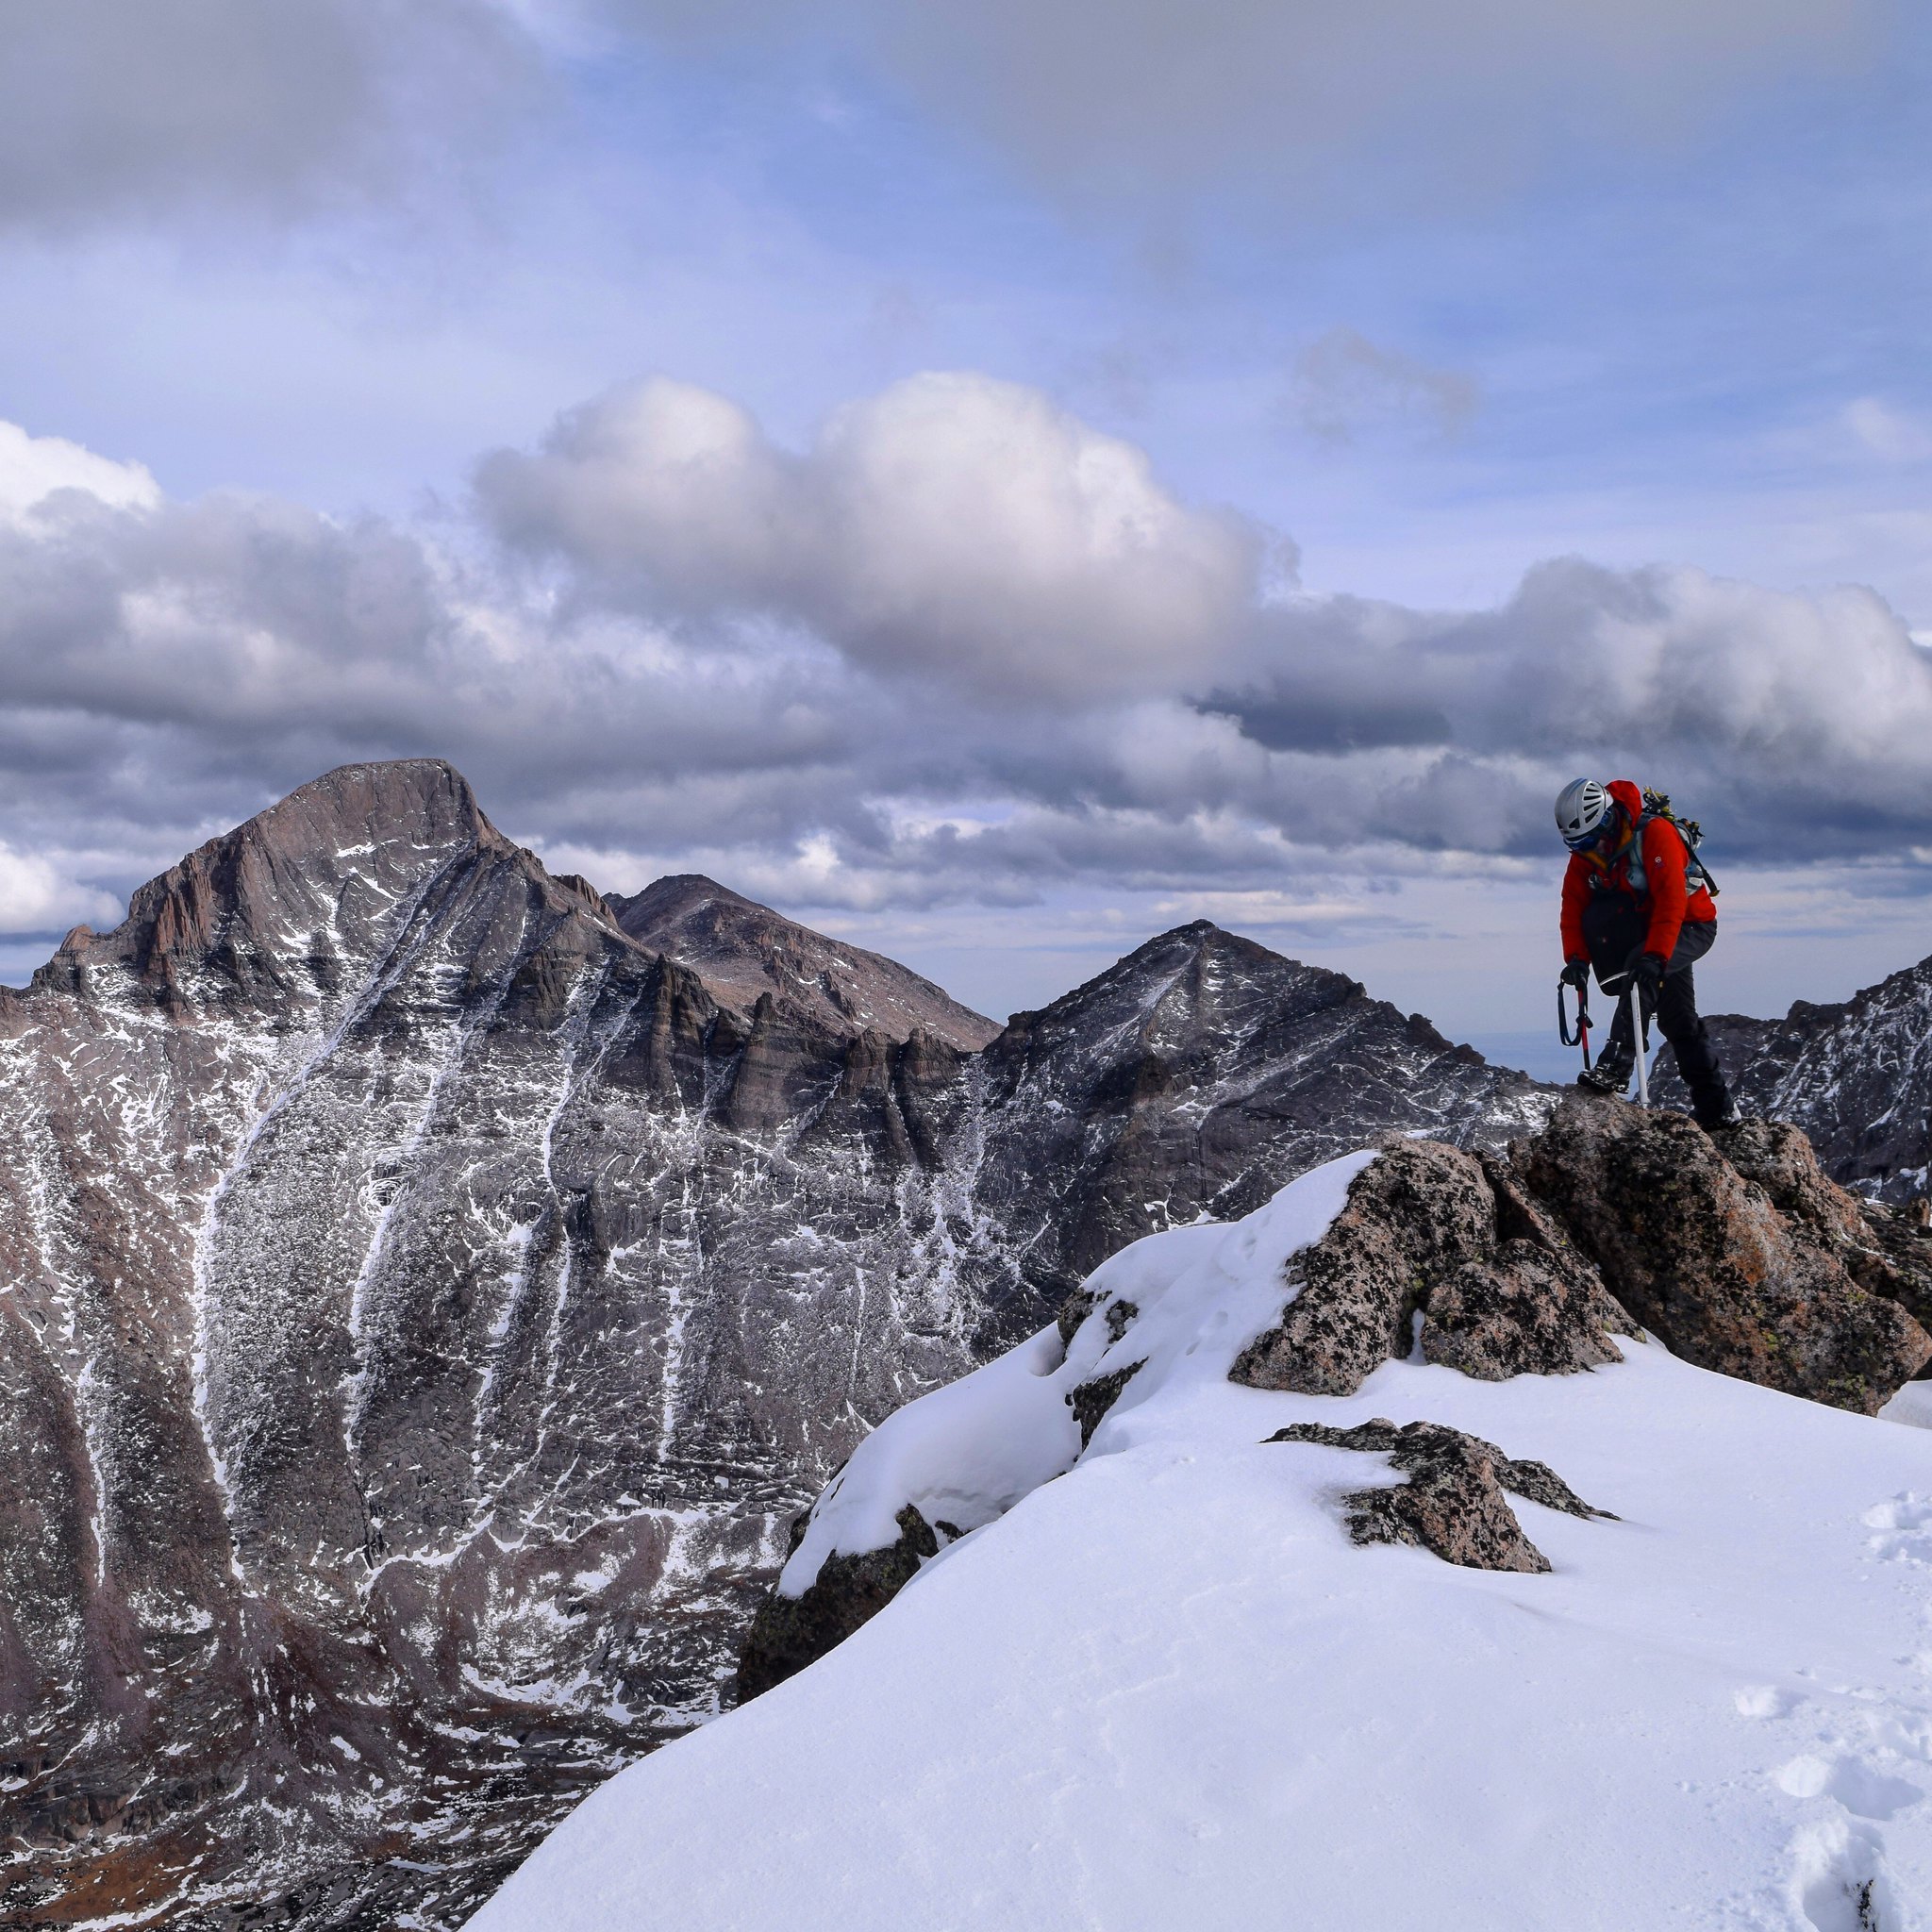 Summit of McHenrys Peak - Elevation 13,324' - October 30, 2016